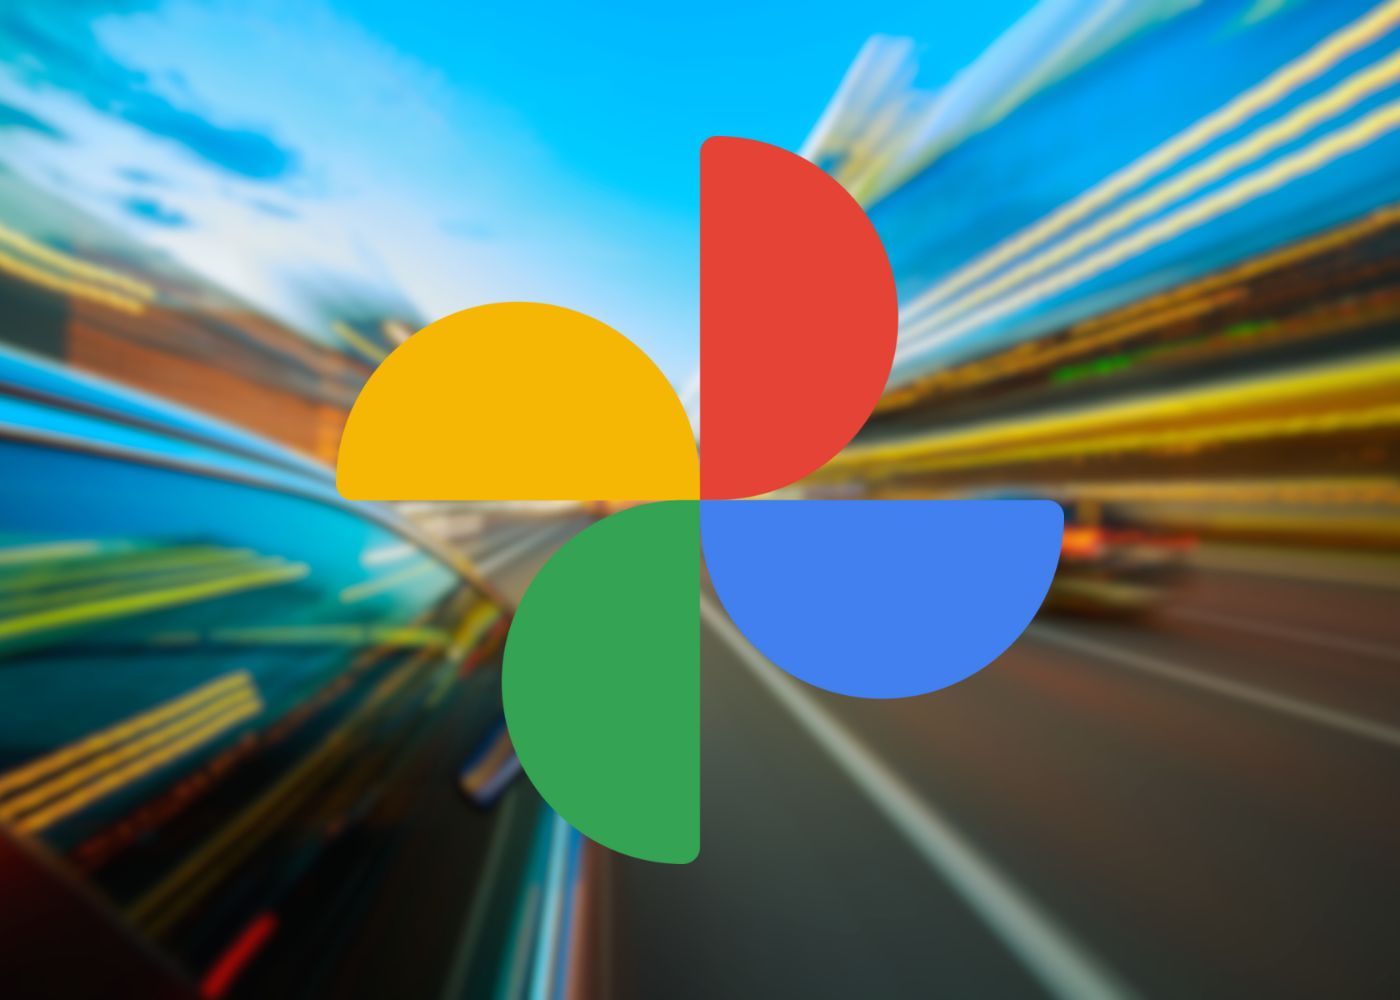 Google photo logo overlaid on an image of blurred traffic